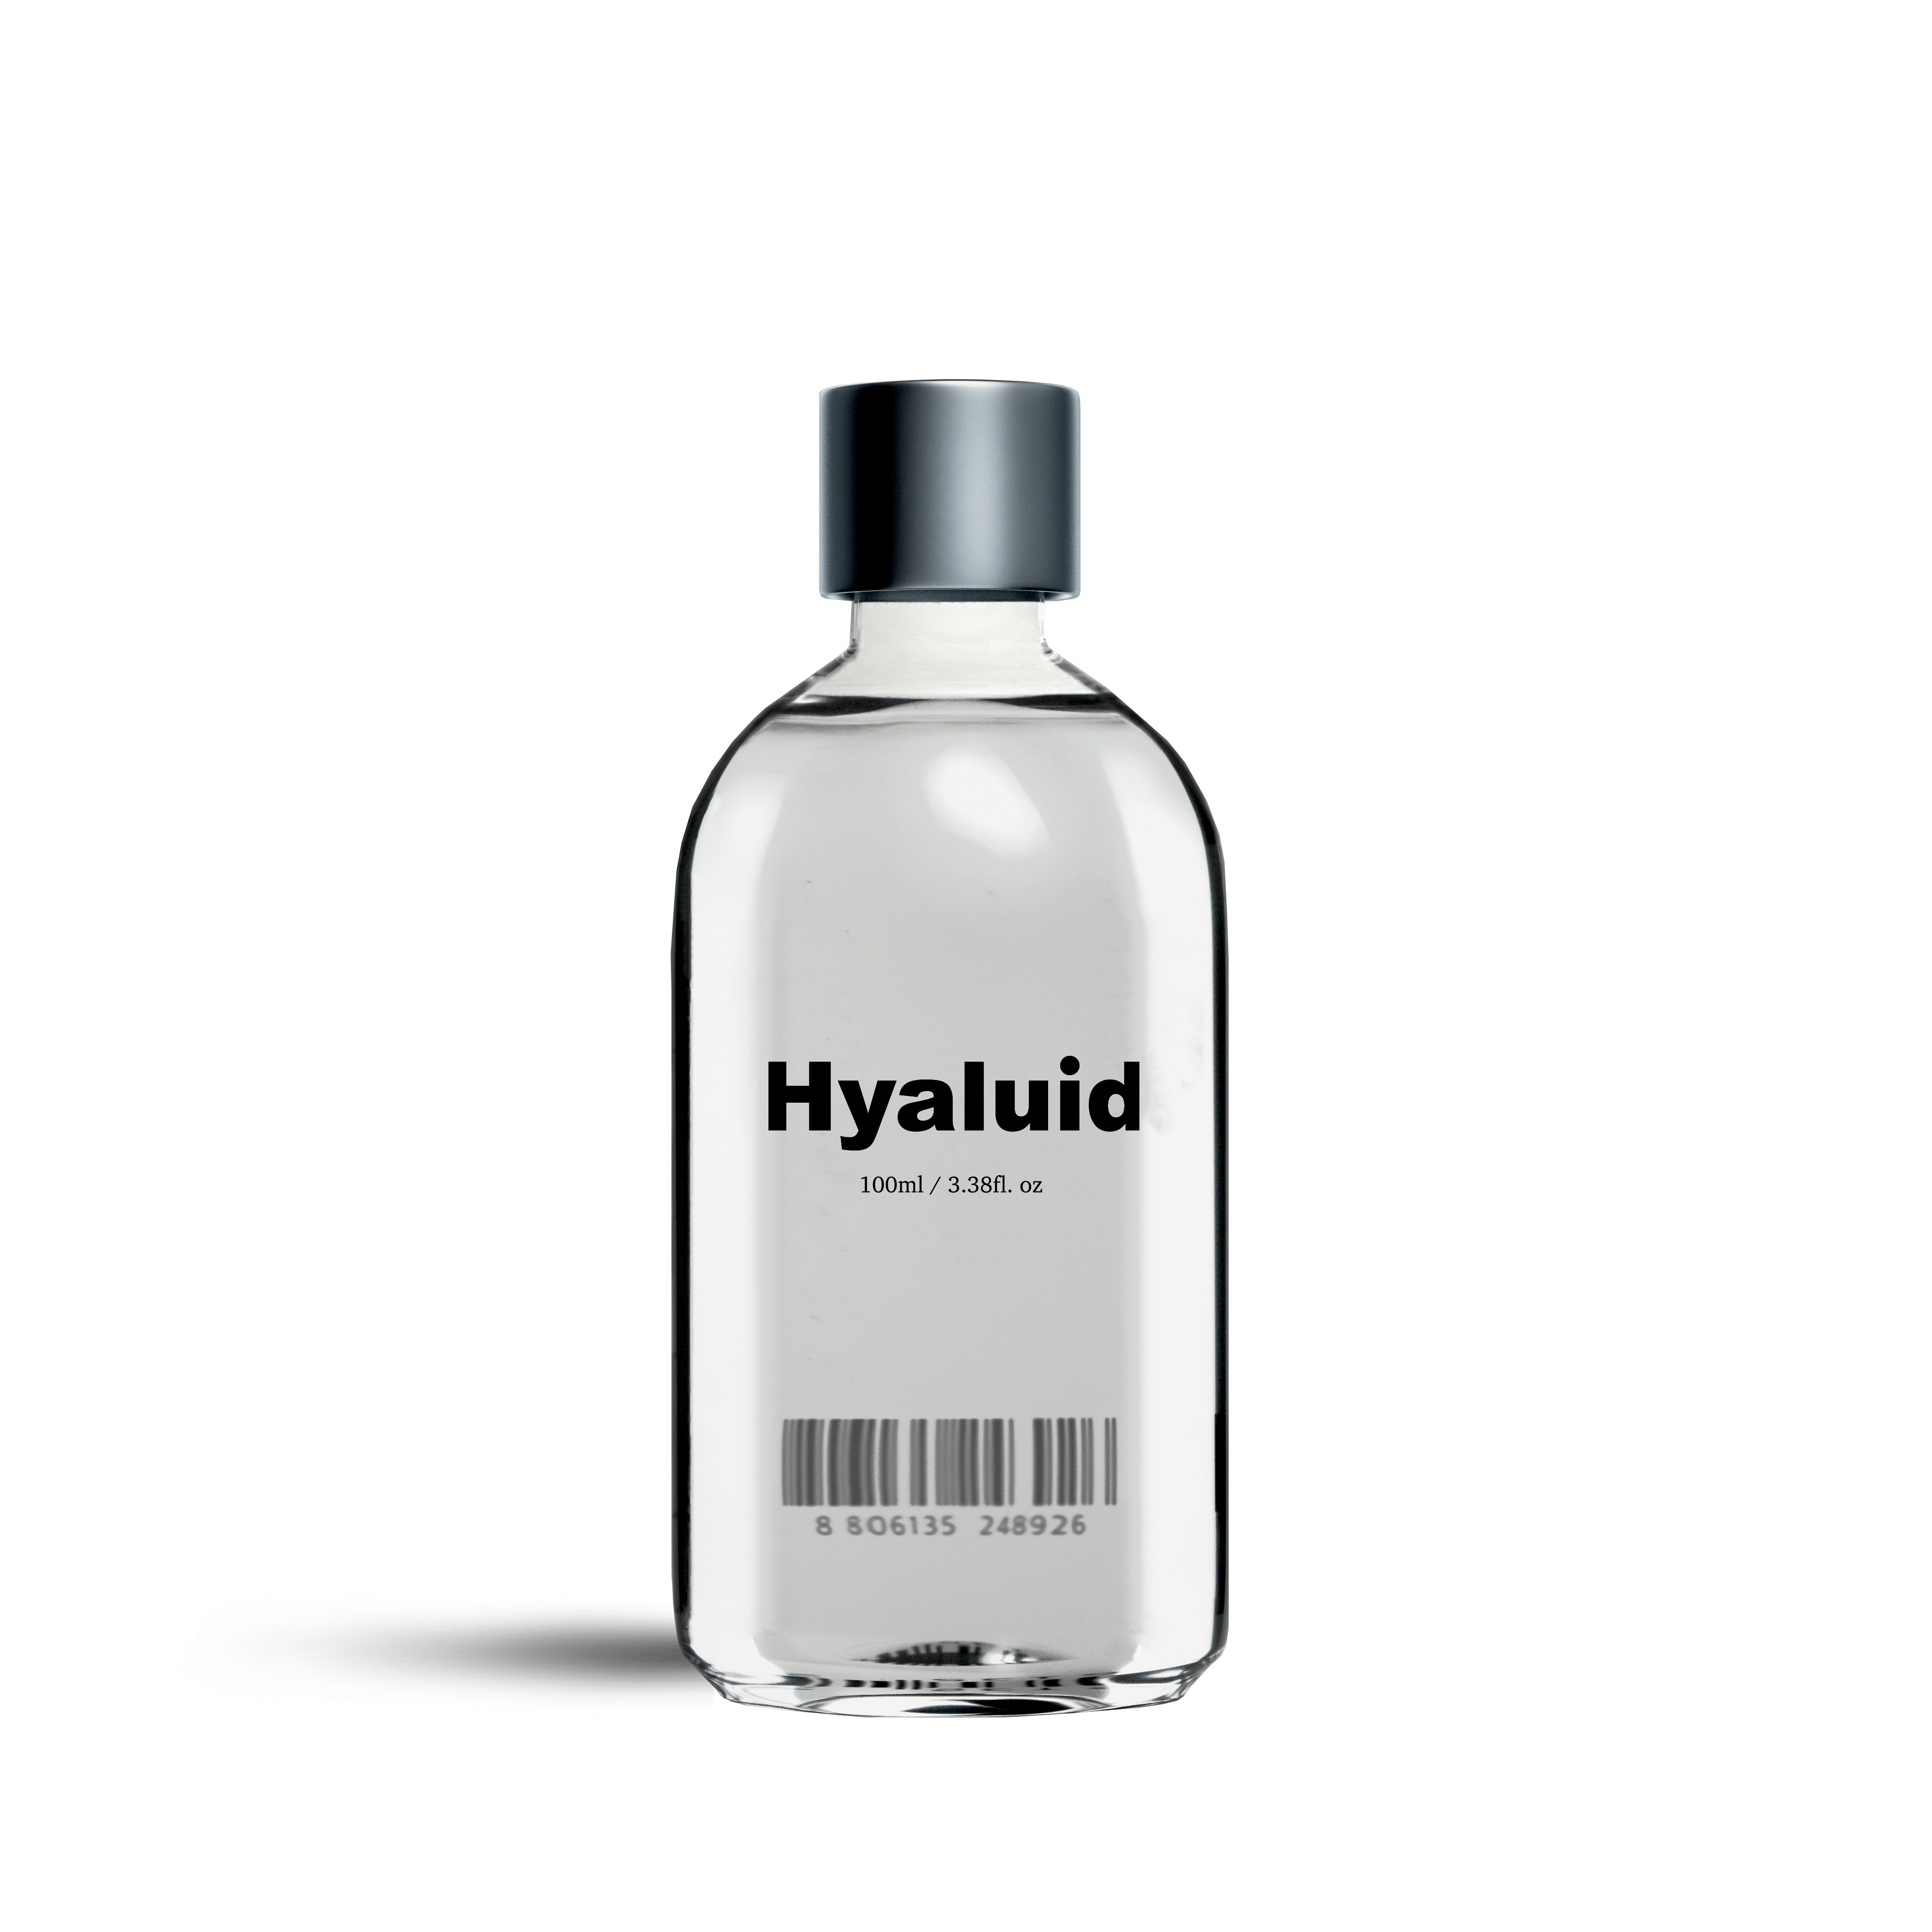 Slurp Laboratories - Hyaluid